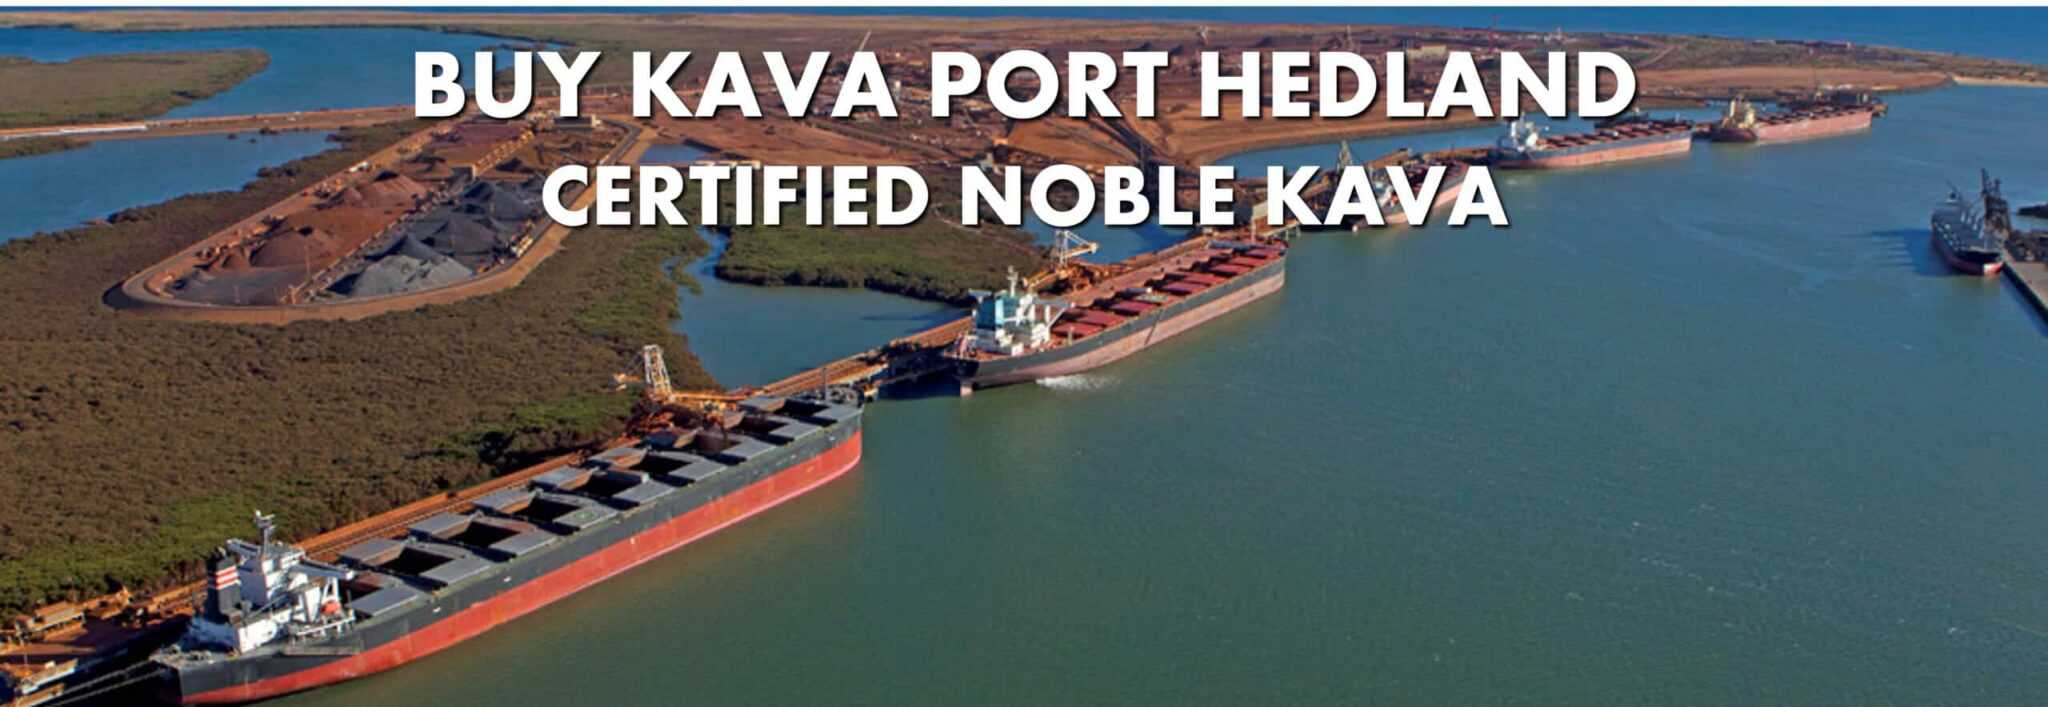 Iron ore tanker in Port Hedland Western Australia with caption Buy Kava Port Hedland Certified Noble Kava